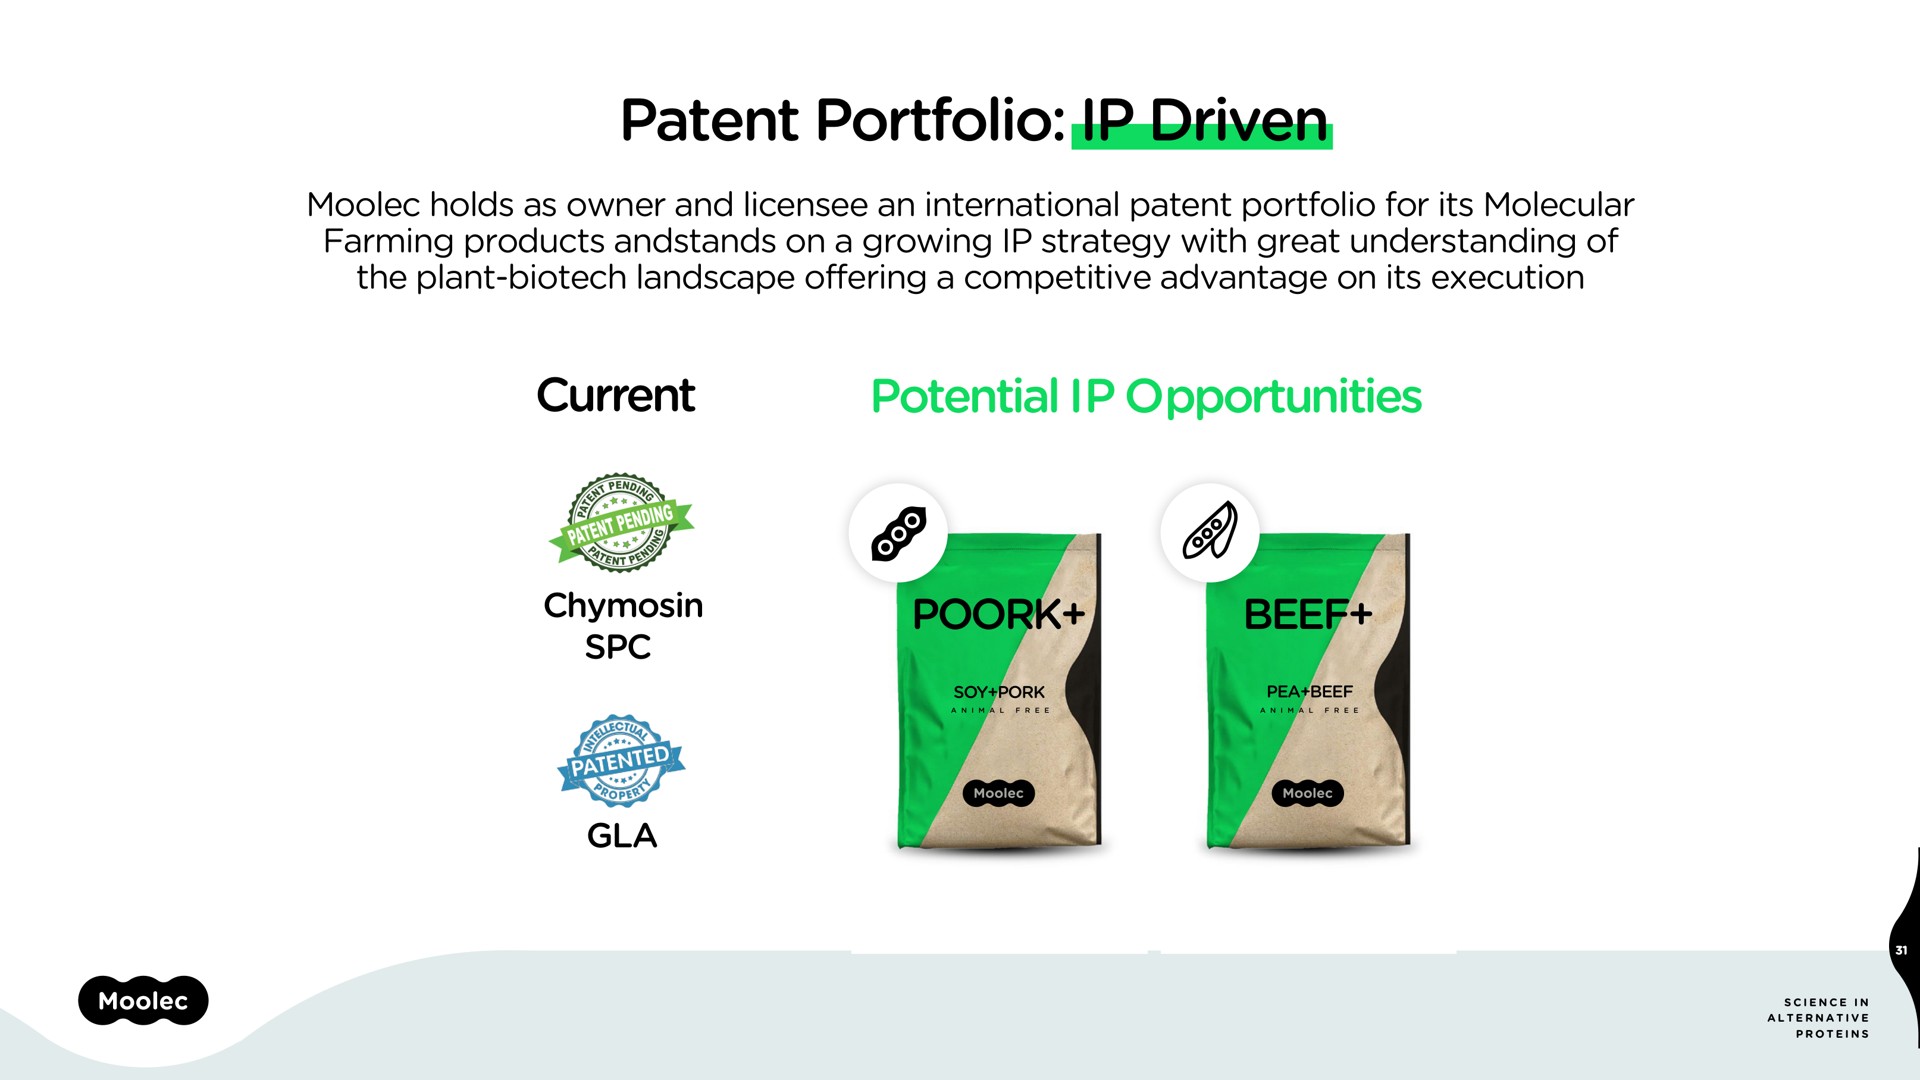 patent portfolio driven current potential opportunities | Moolec Science